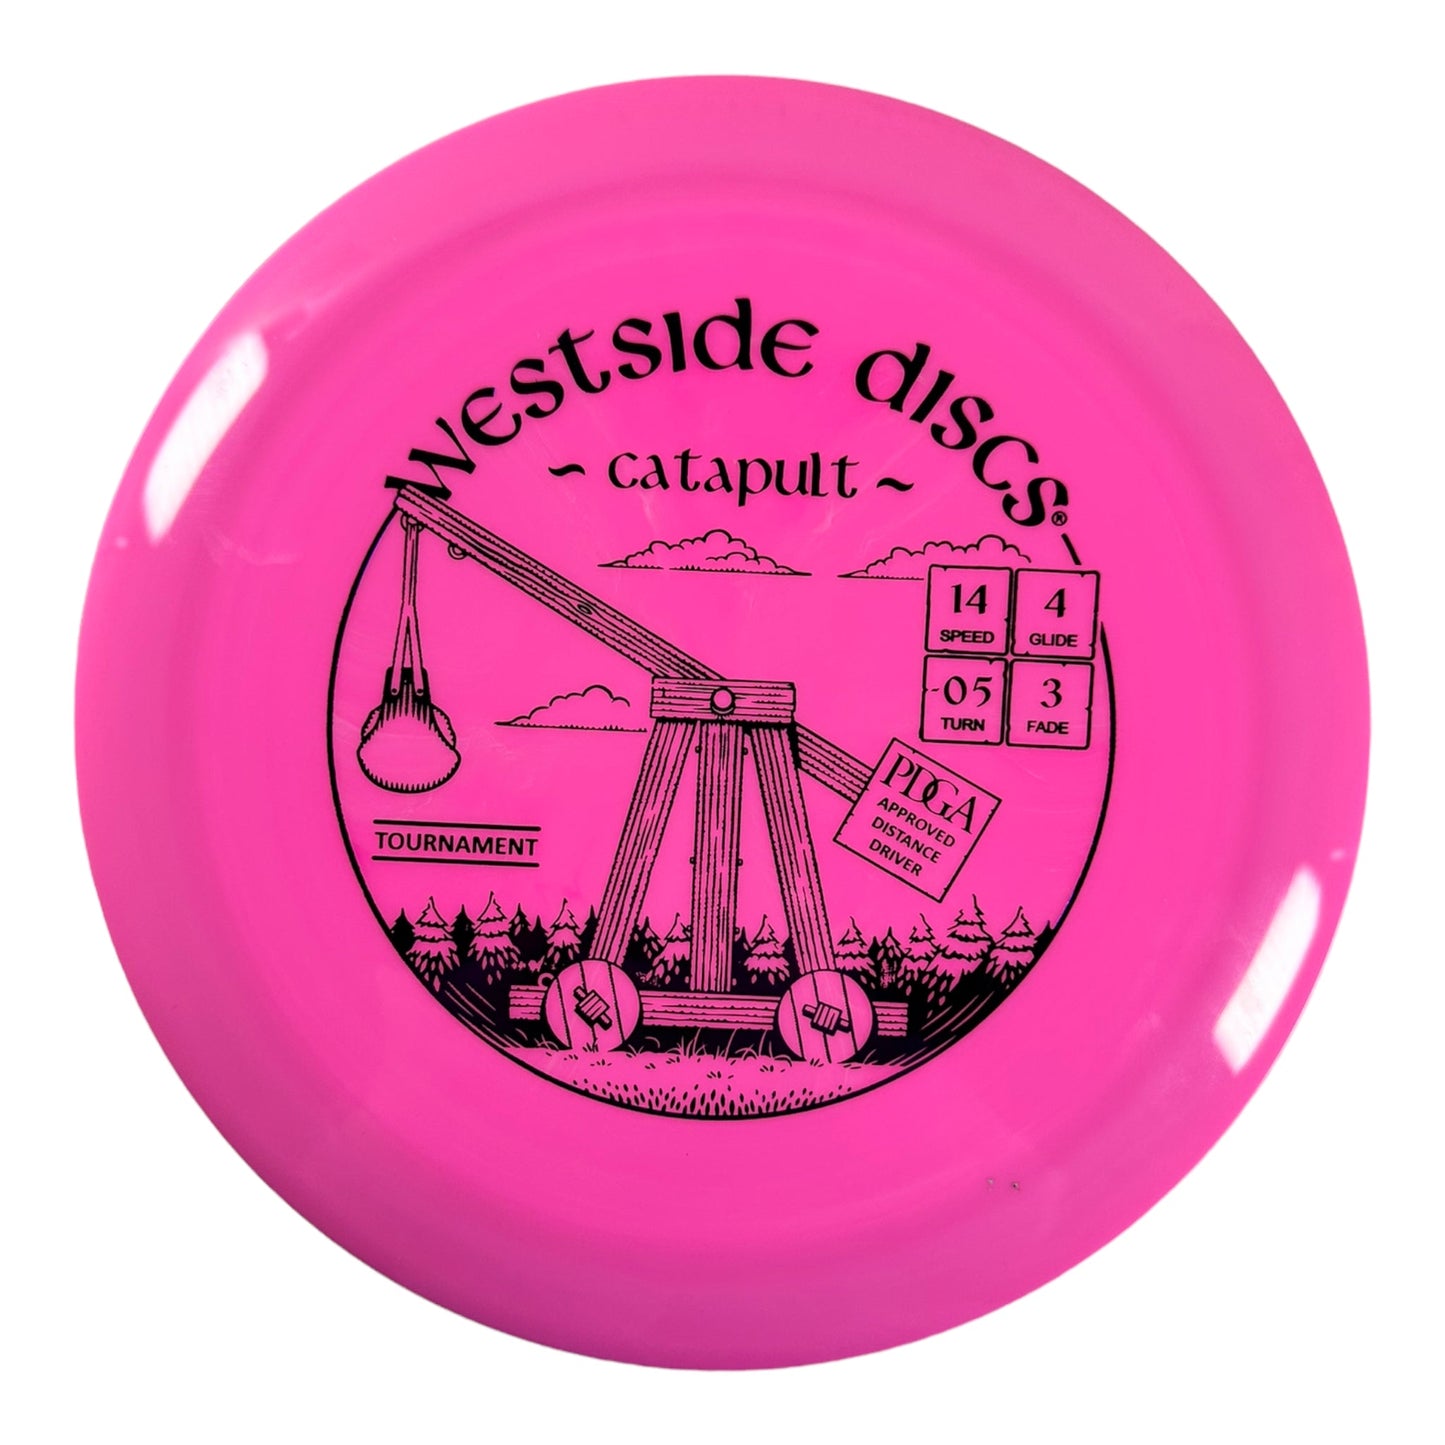 Westside Discs Catapult | Tournament | Pink/Silver 170g Disc Golf